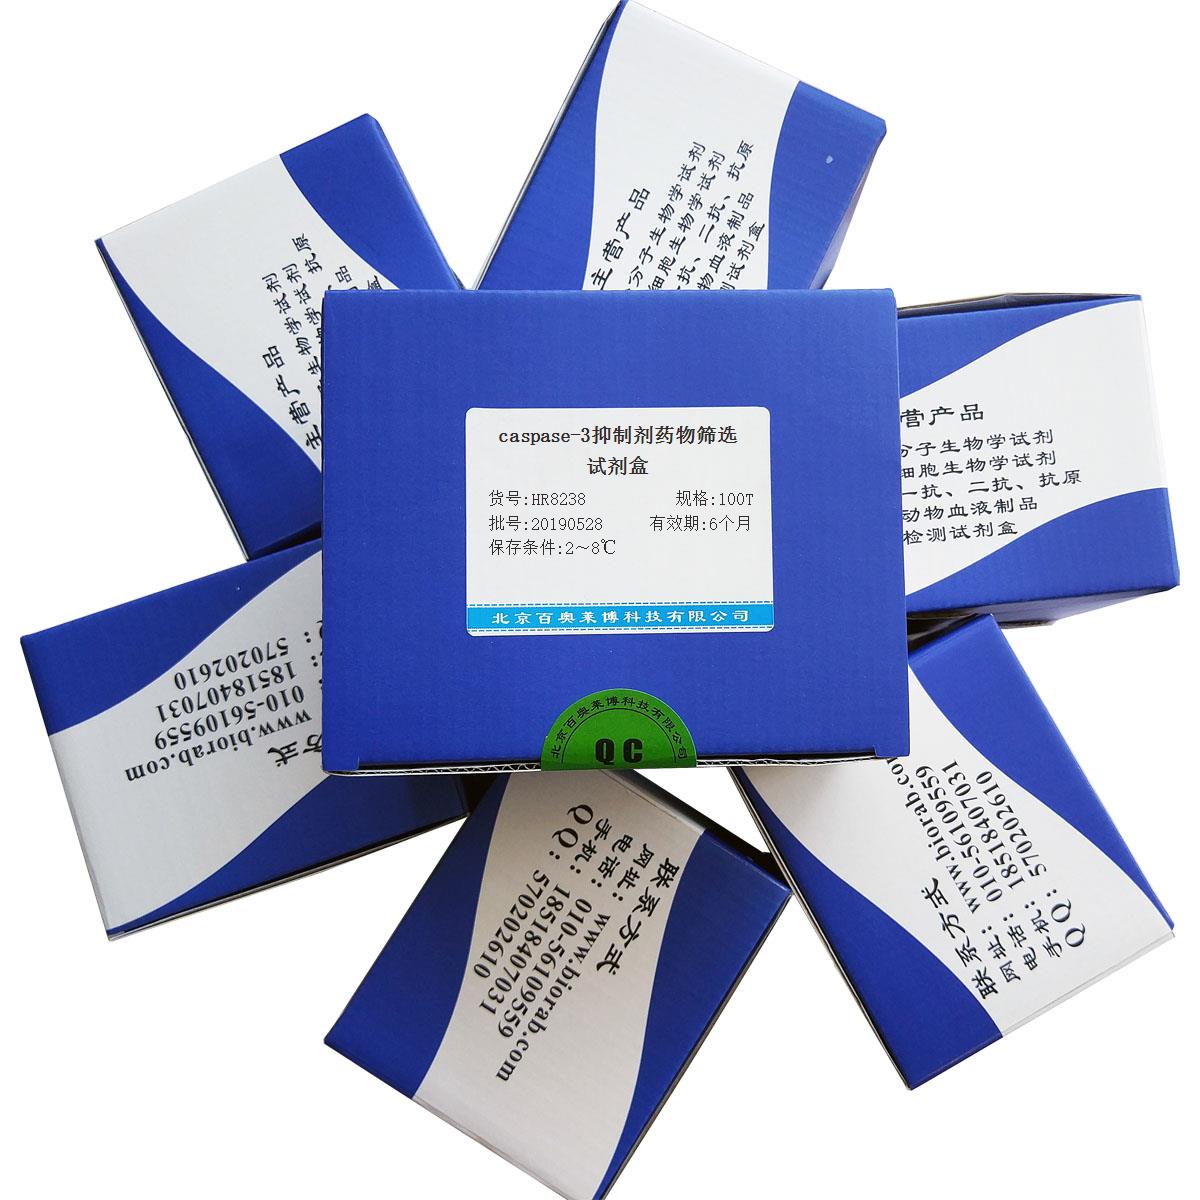 caspase-3抑制剂药物筛选试剂盒价格